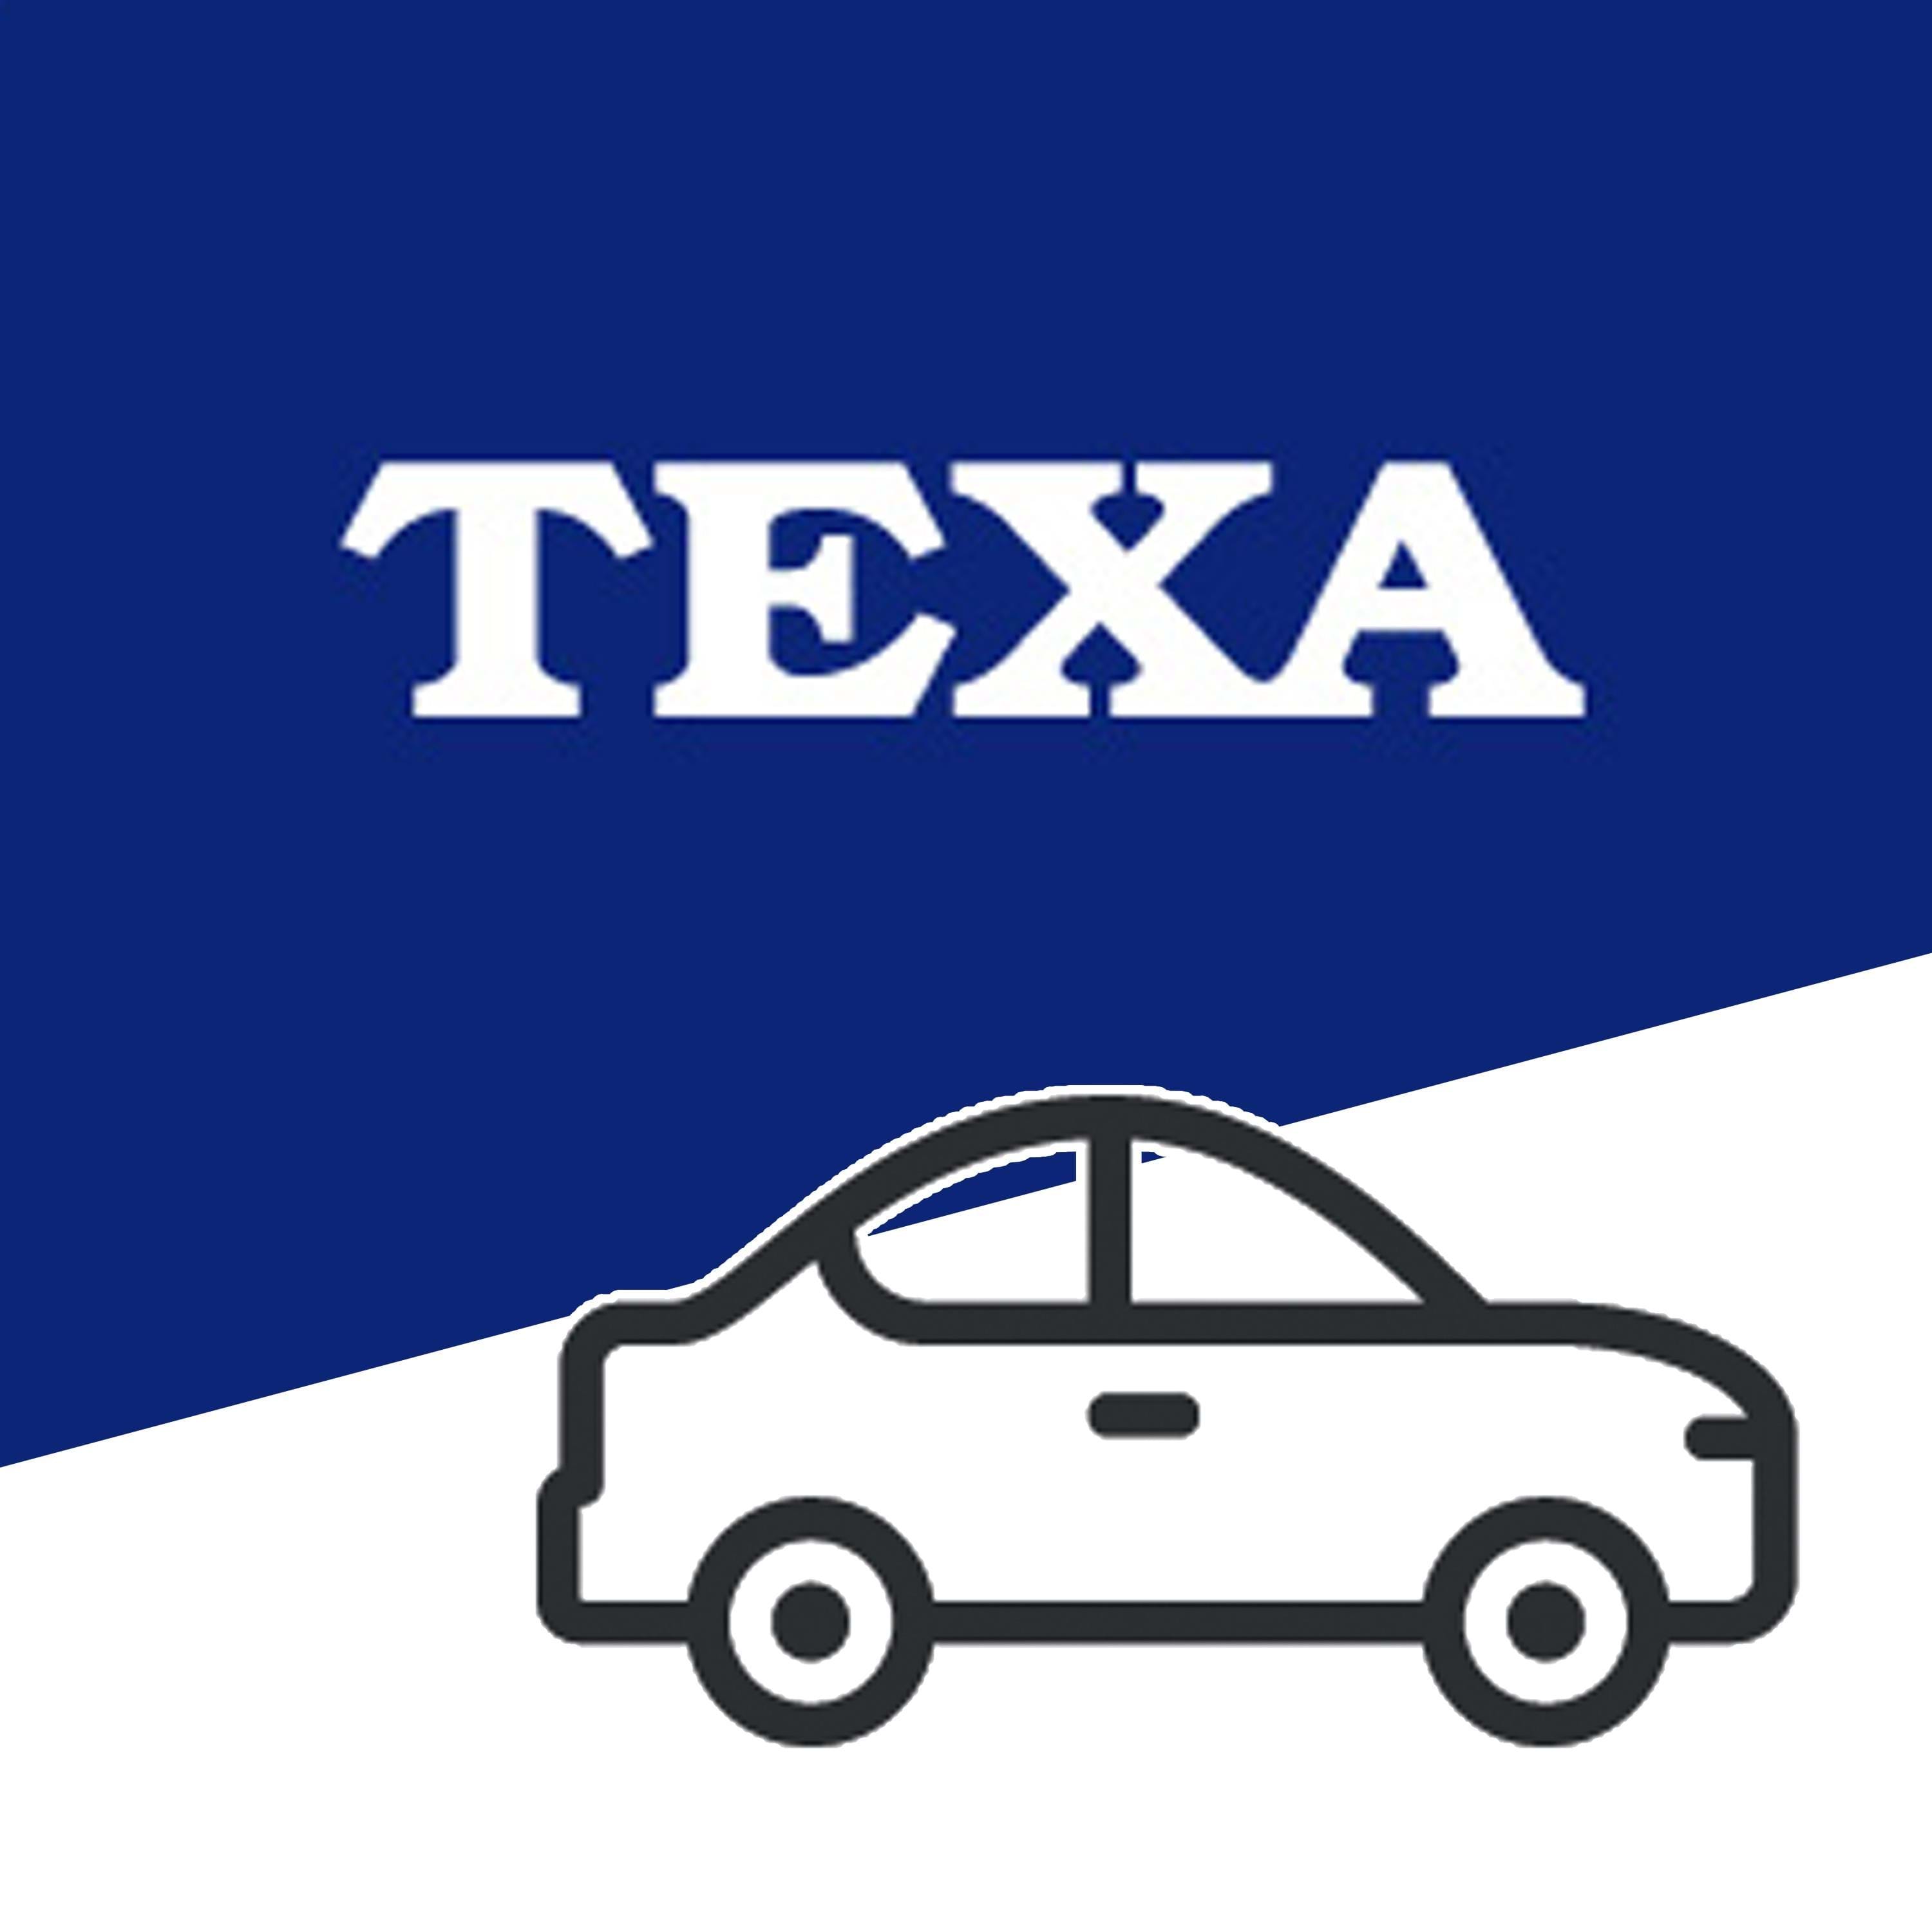 TEXA Texpack Car, Annual Contract